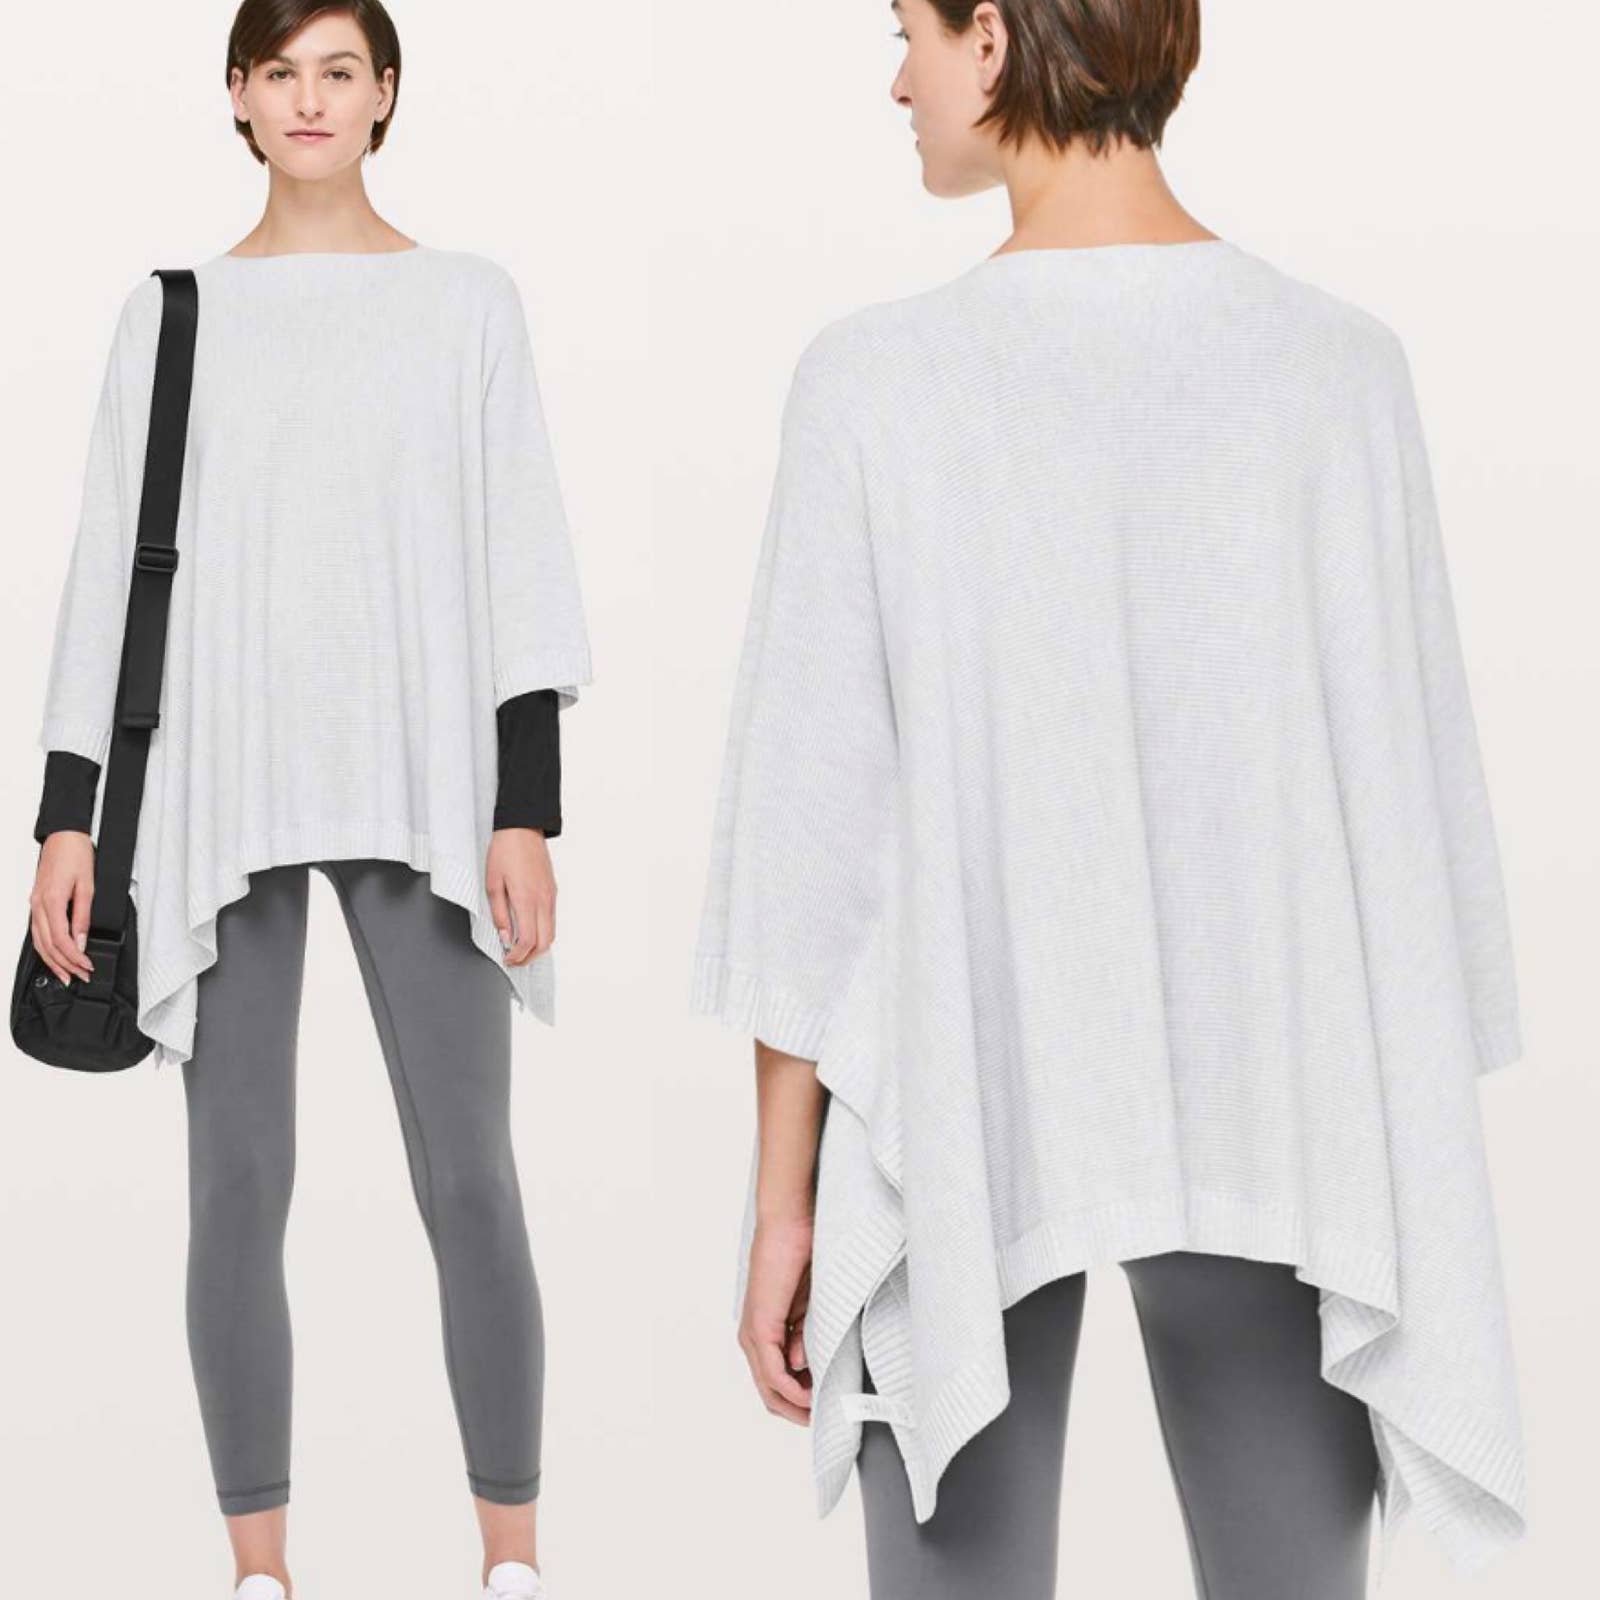 Great Lululemon Women’s Divinity Poncho Sweater Size Medium Jr7Kviqgj outlet online shop